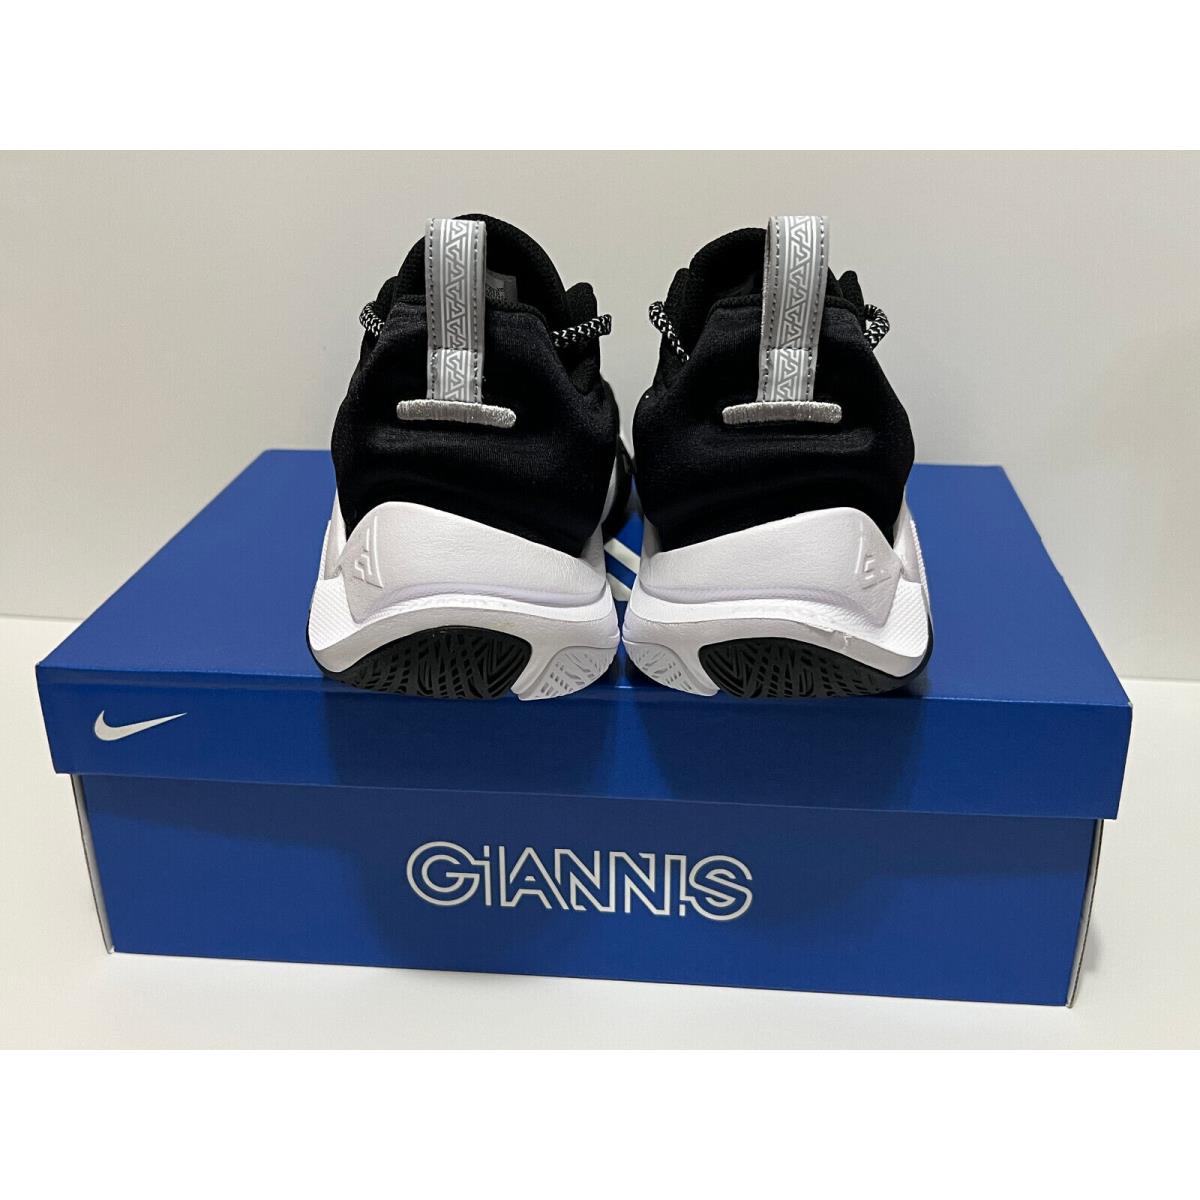 Nike shoes Giannis Immortality - Black 2